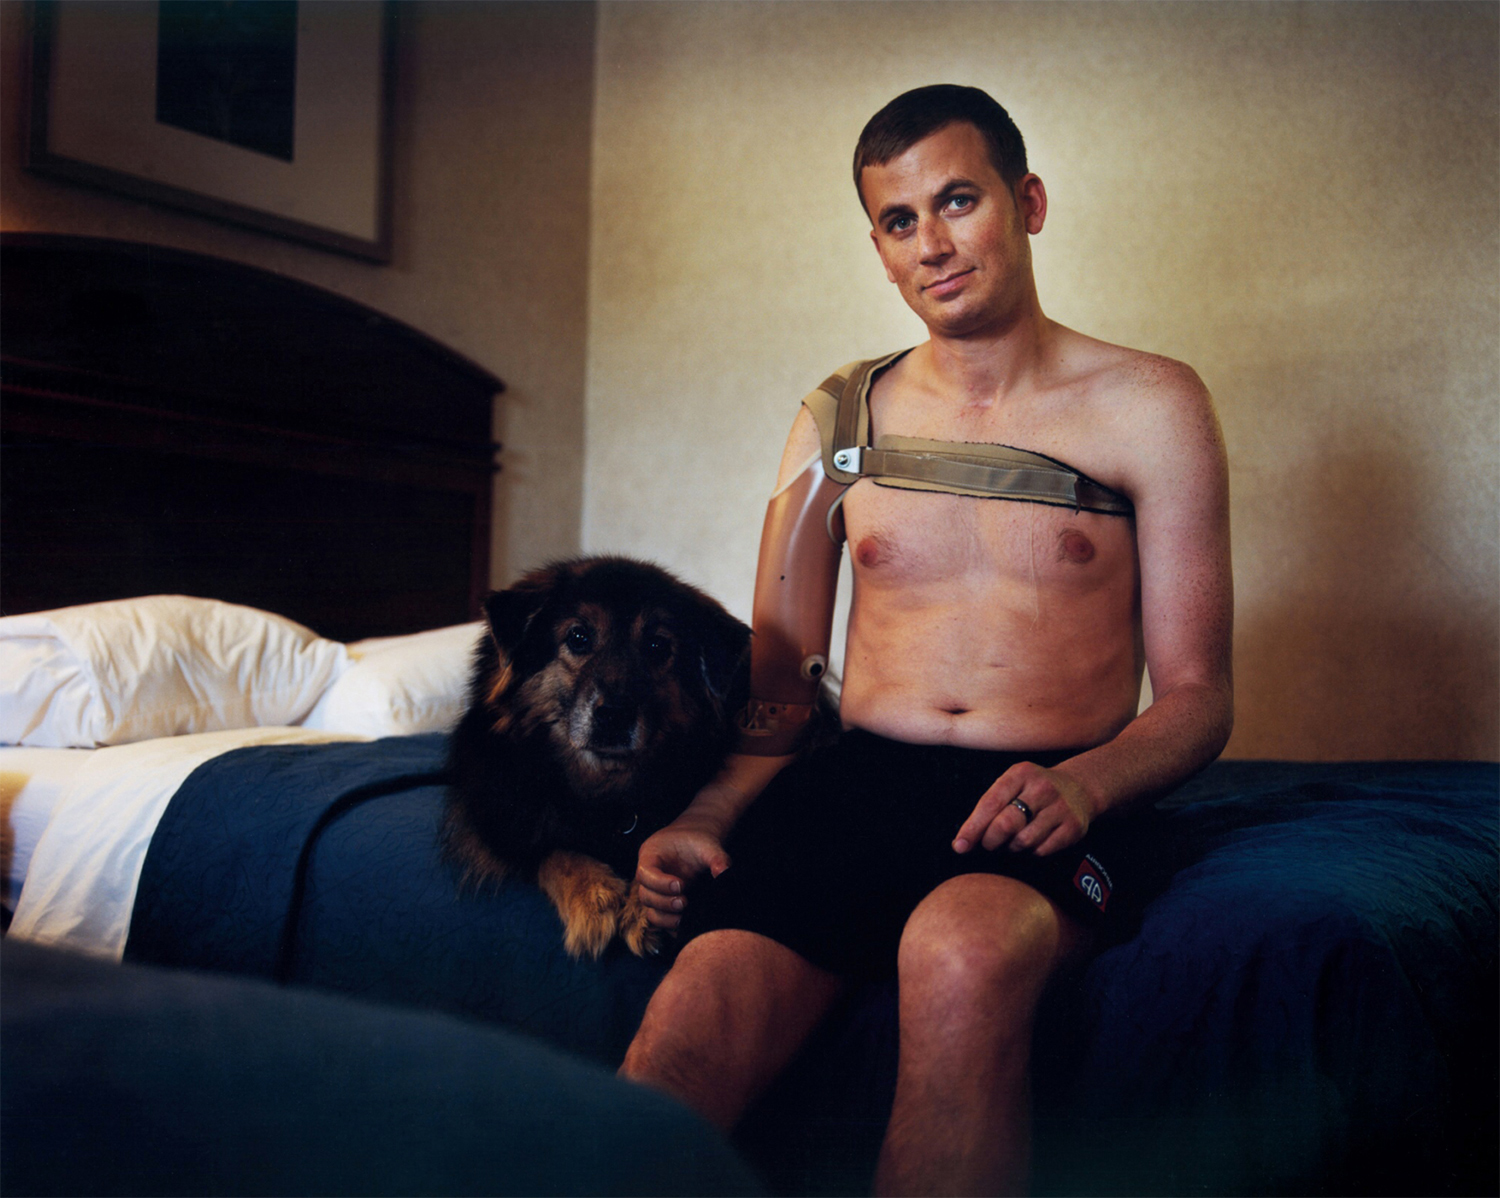   Ted Wade - Iraq War Veteran, sustained severe Traumatic Brain Injury (TBI) and transhumeral amputation - Washington, D.C.  